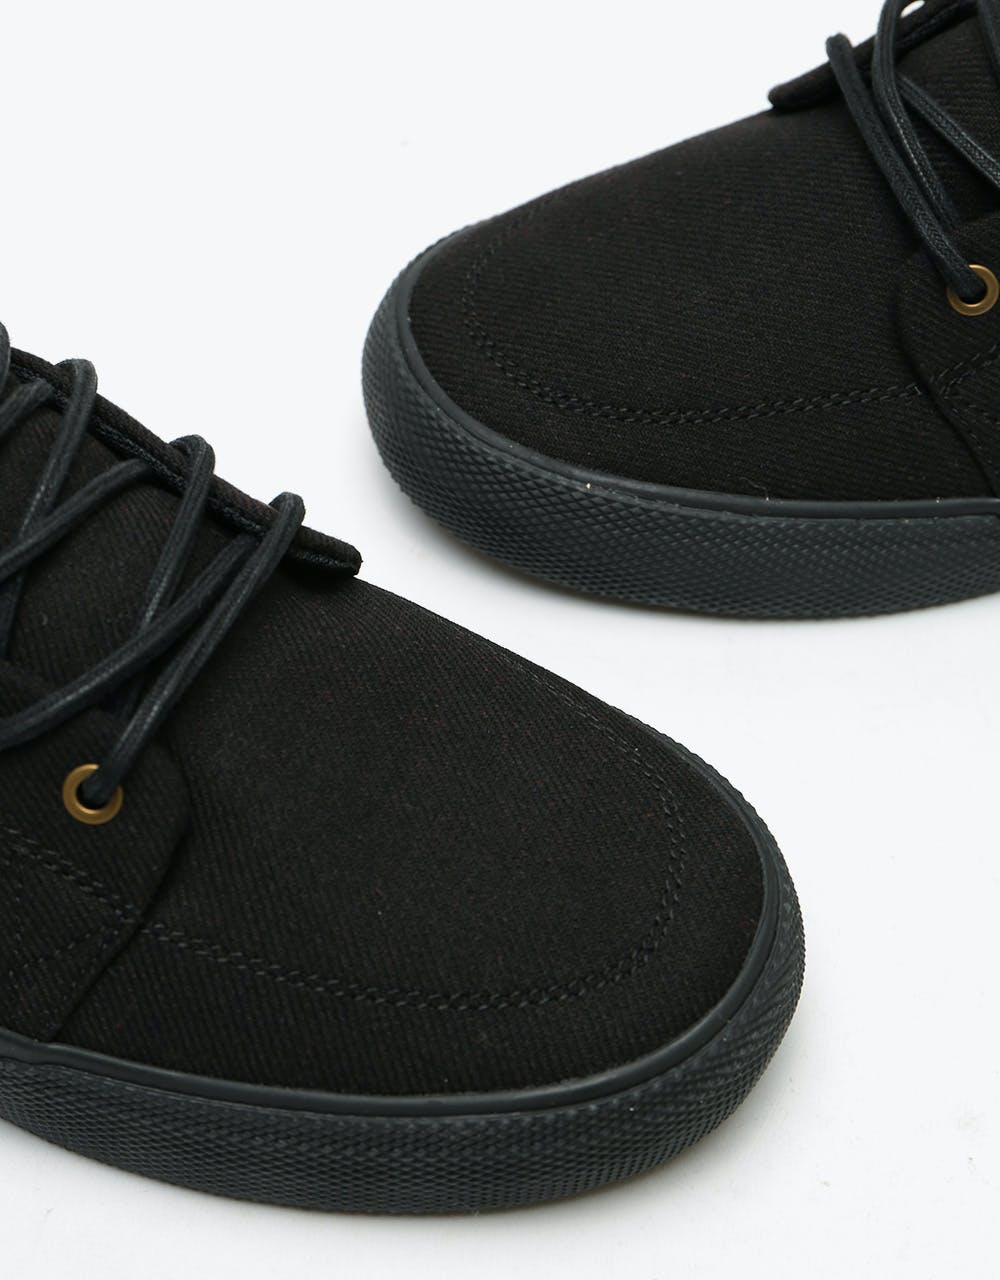 Globe GS Skate Shoes - Long Black/Toffee